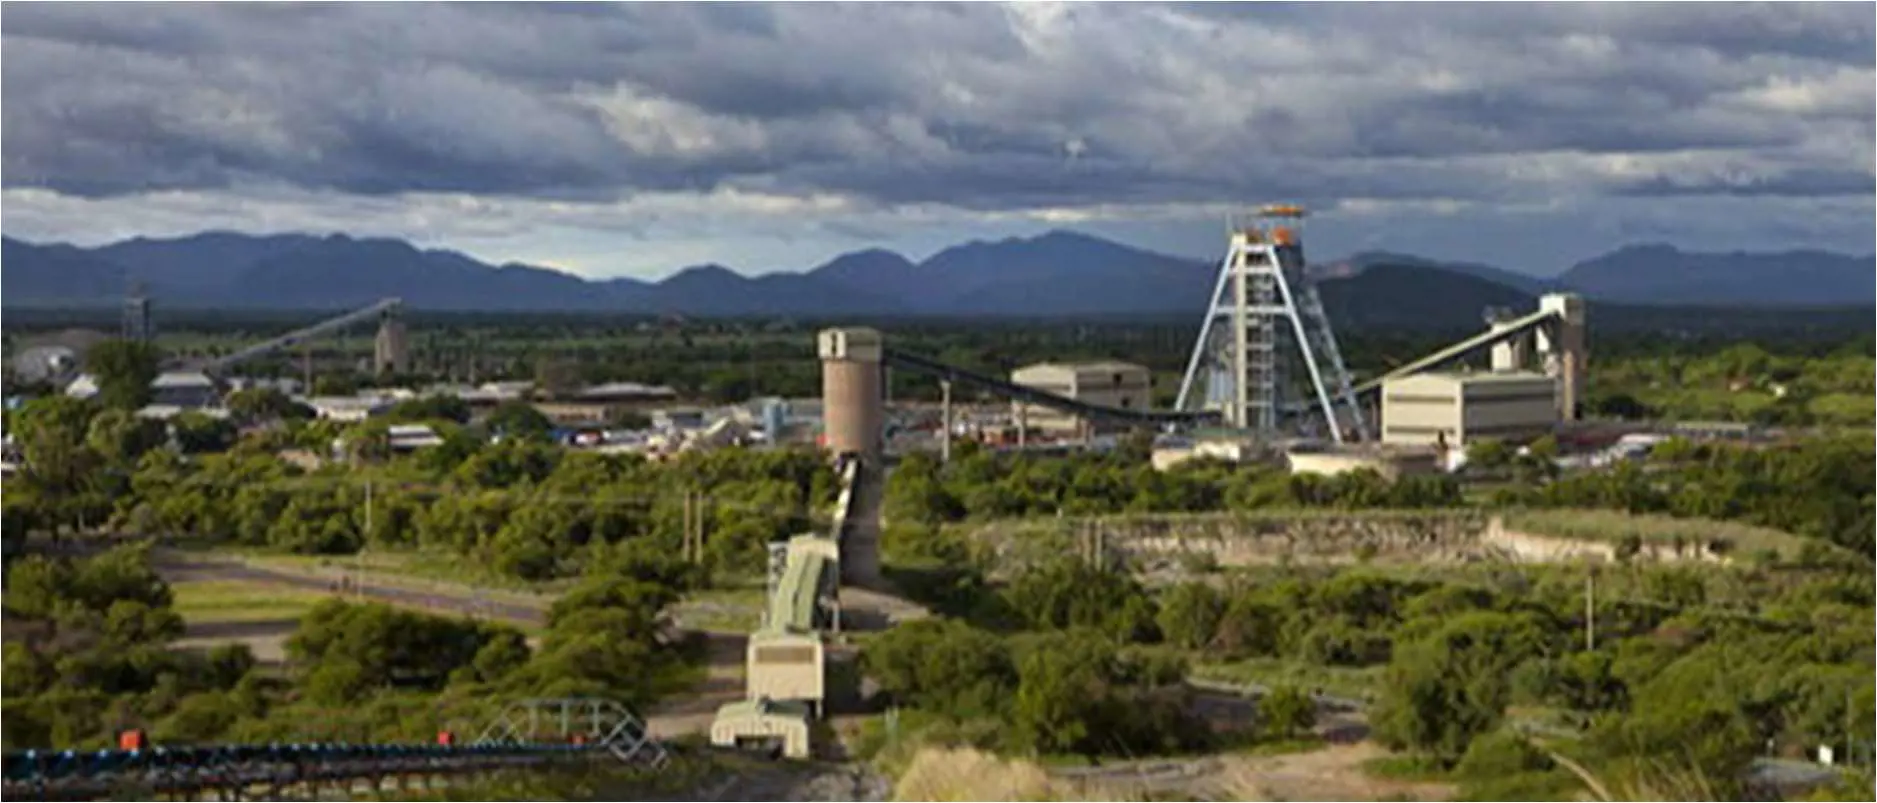 Amandelbult Mine Complex, Limpopo Province, South Africa.